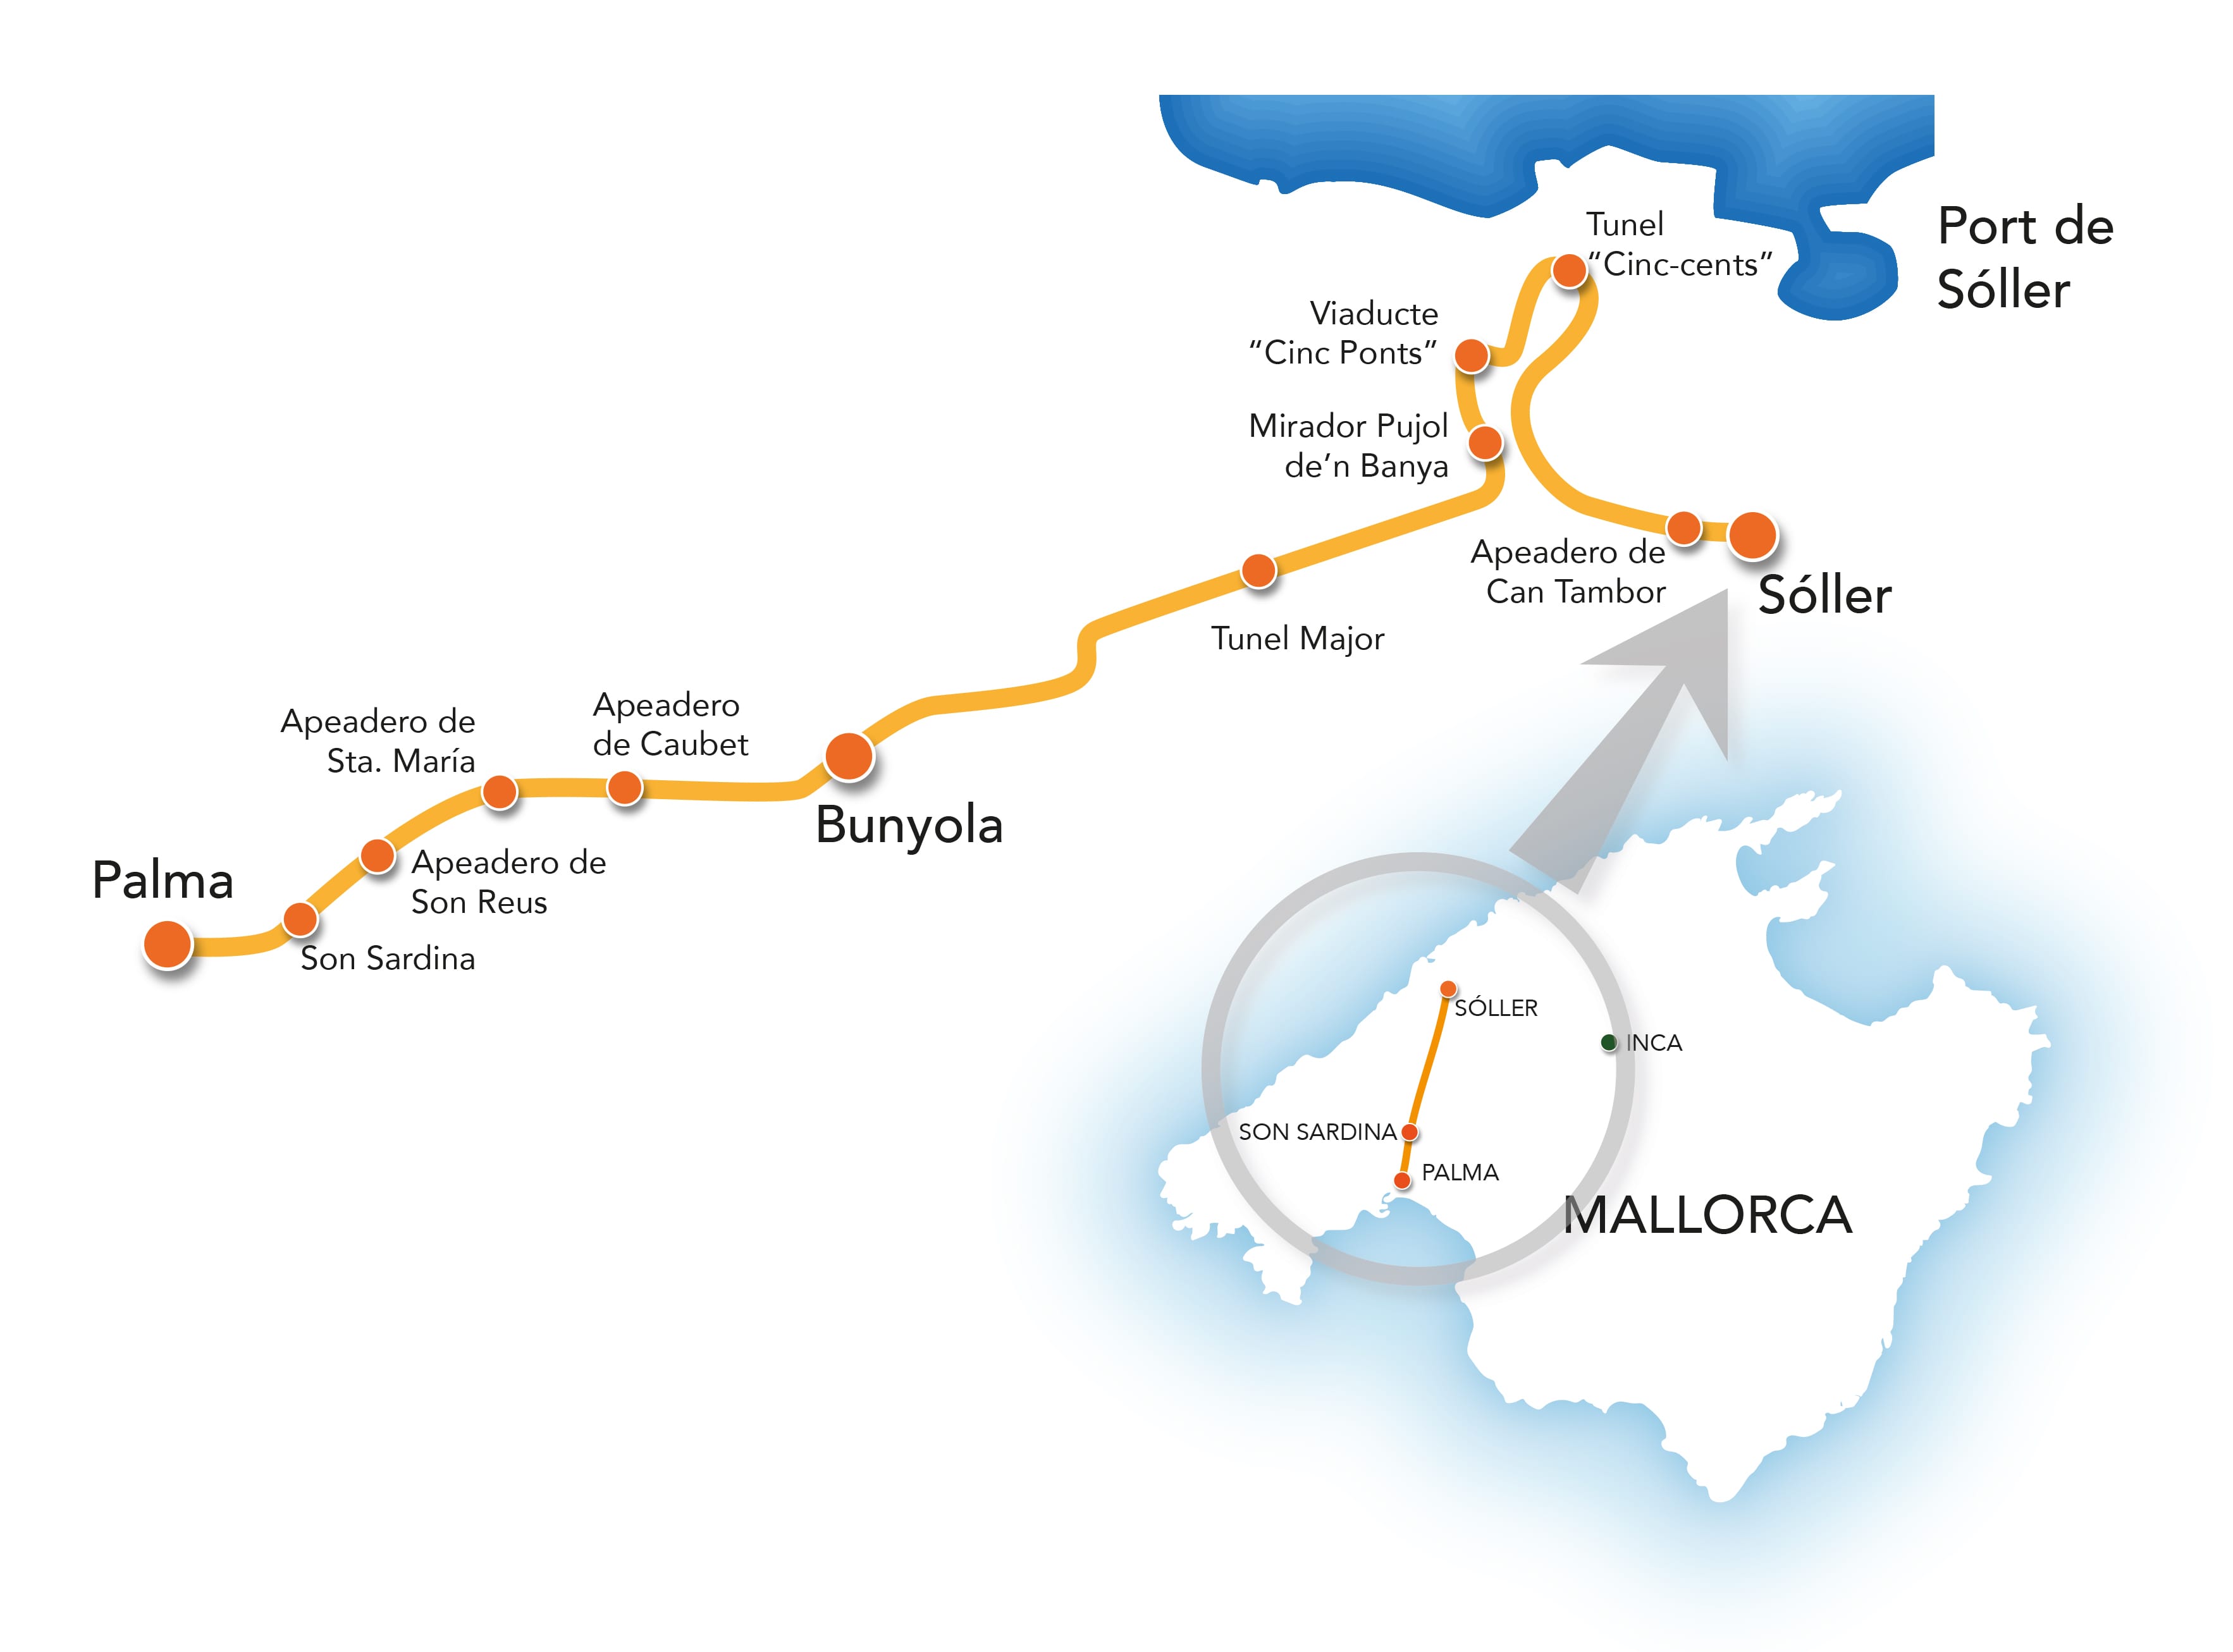 Mapa de la ruta que recorre el tren de Sóller